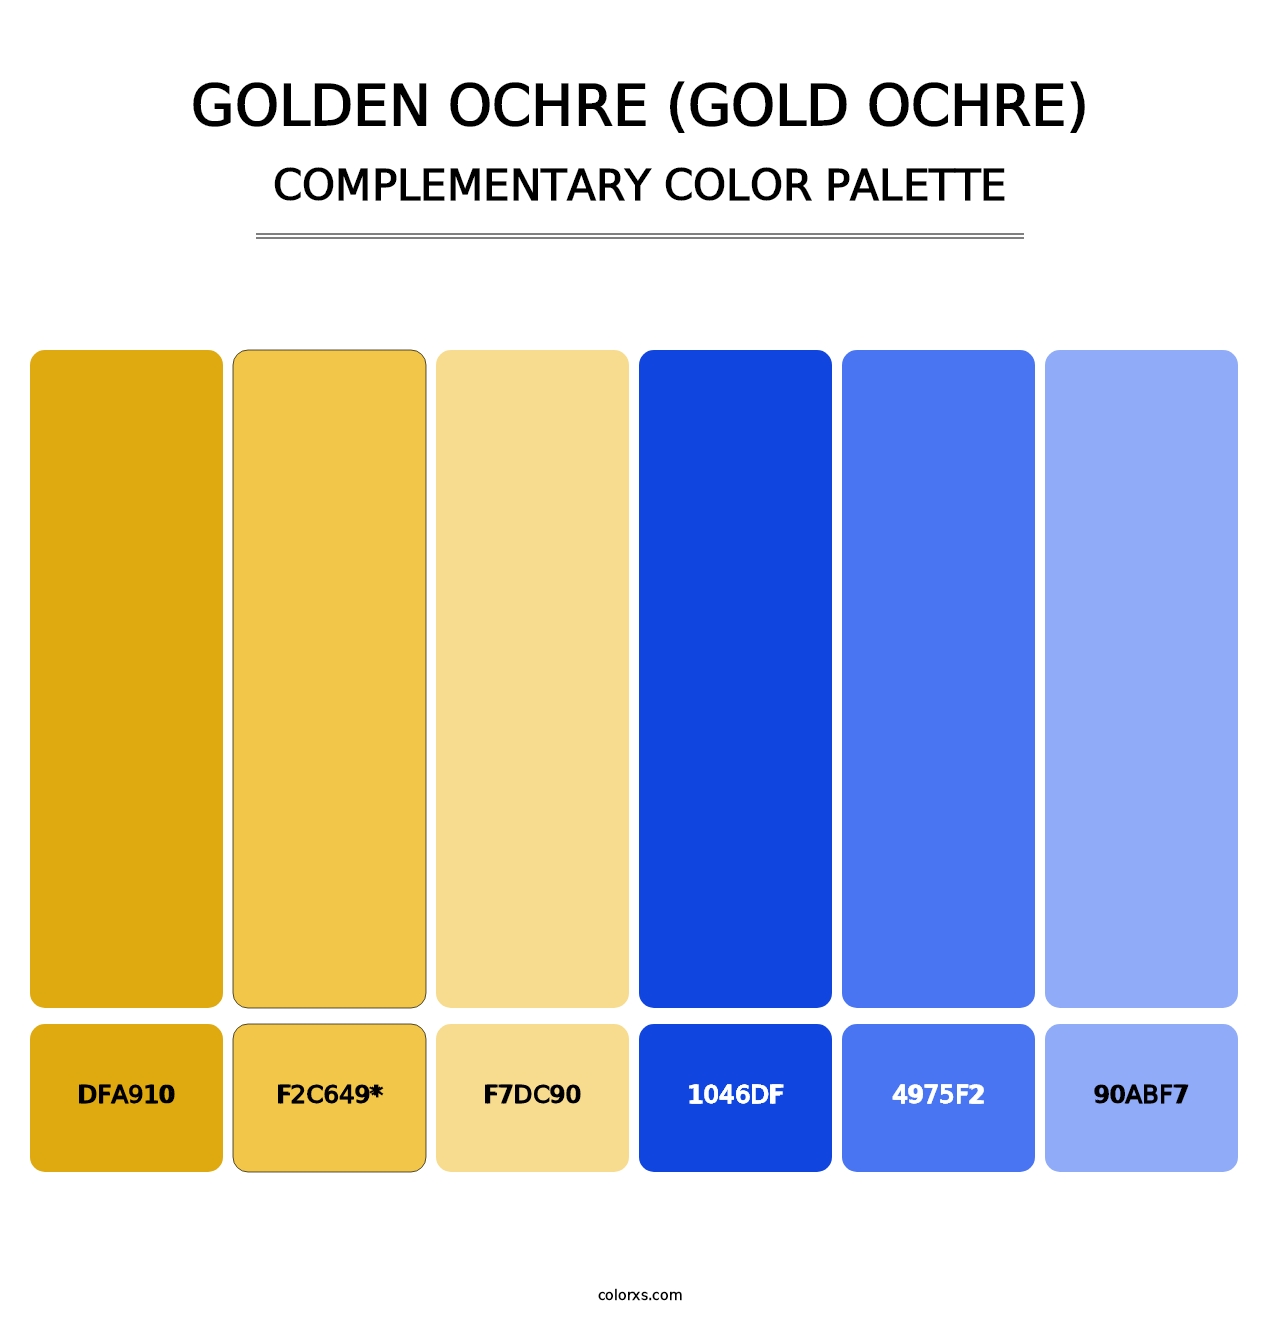 Golden Ochre (Gold Ochre) - Complementary Color Palette